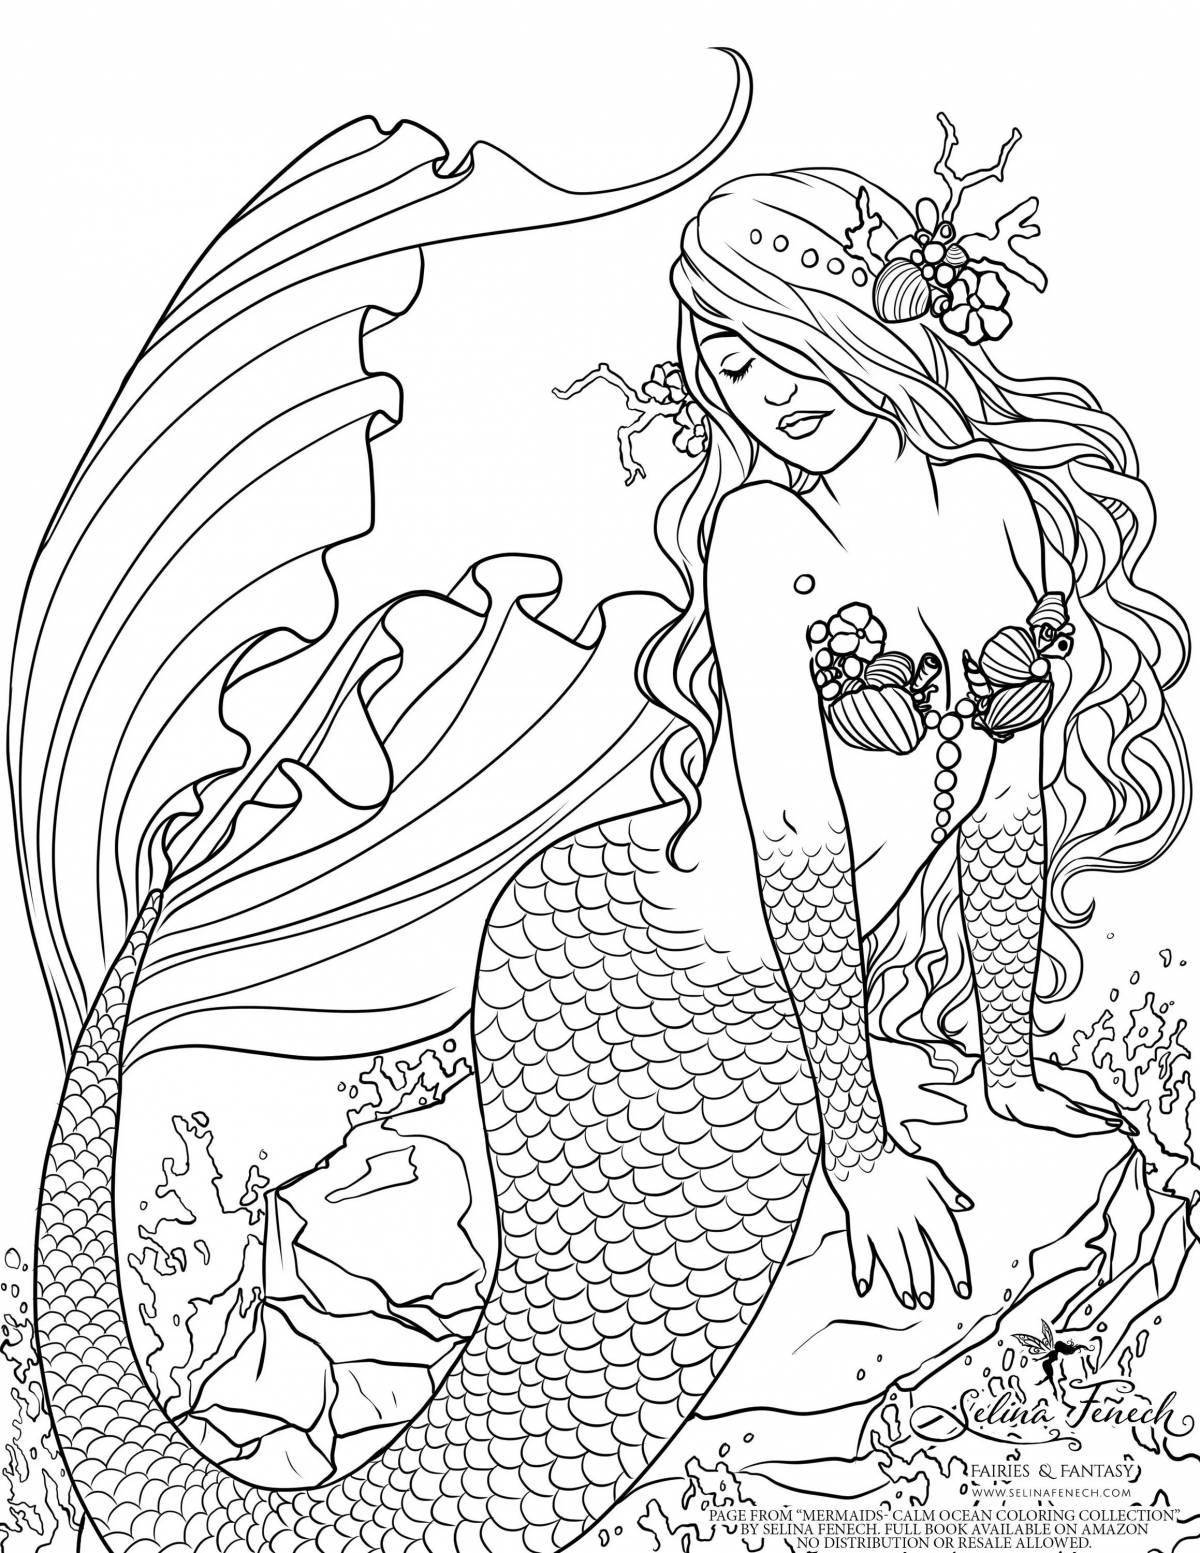 Shining coloring drawing of a mermaid